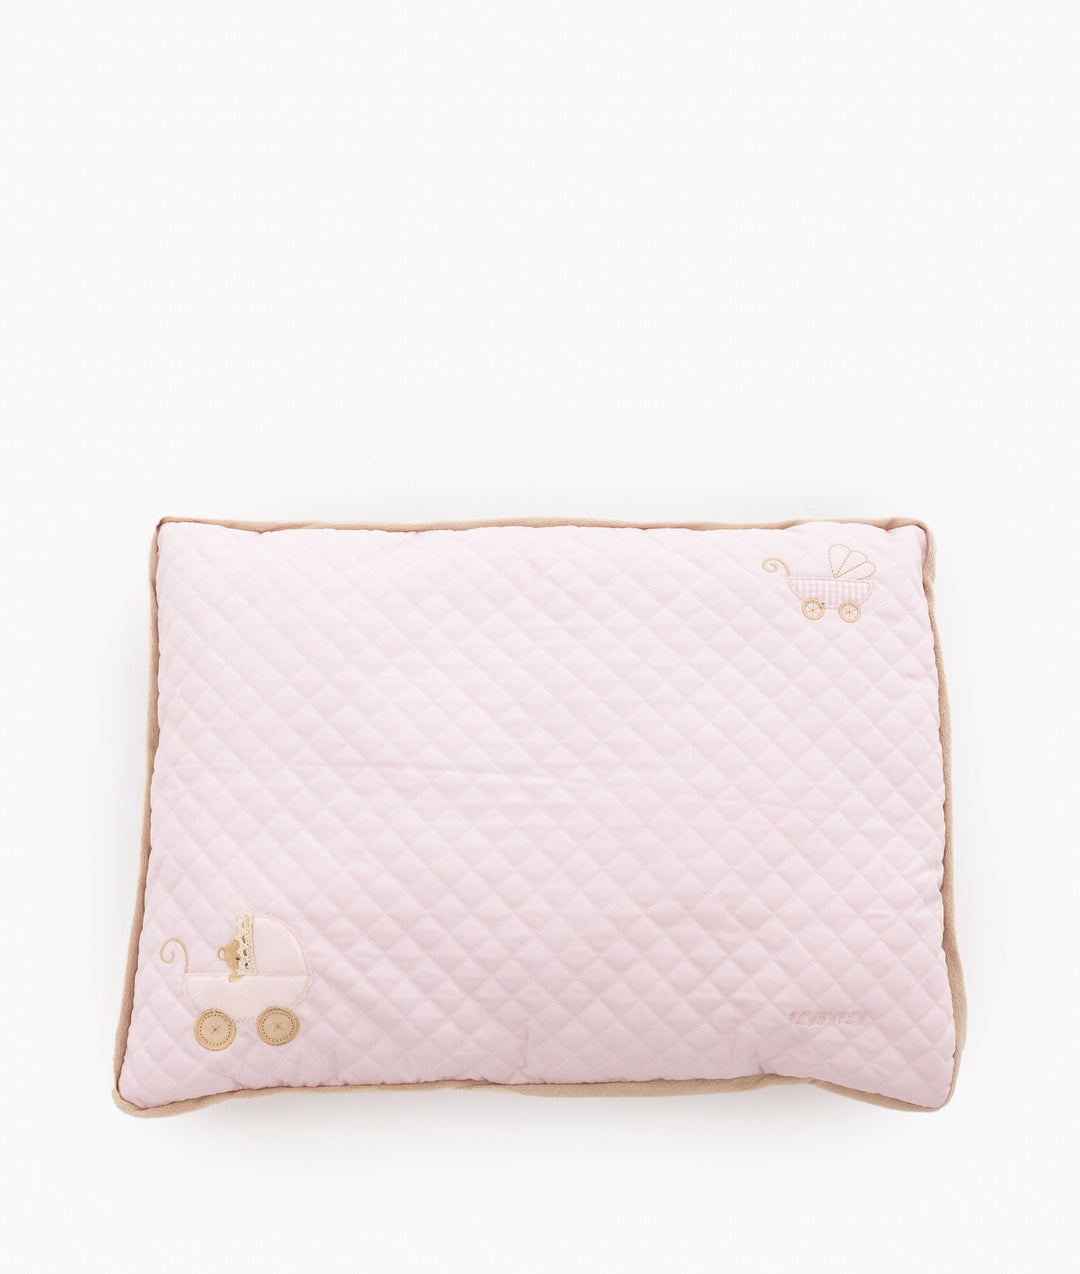 Kids Pillow - Pink